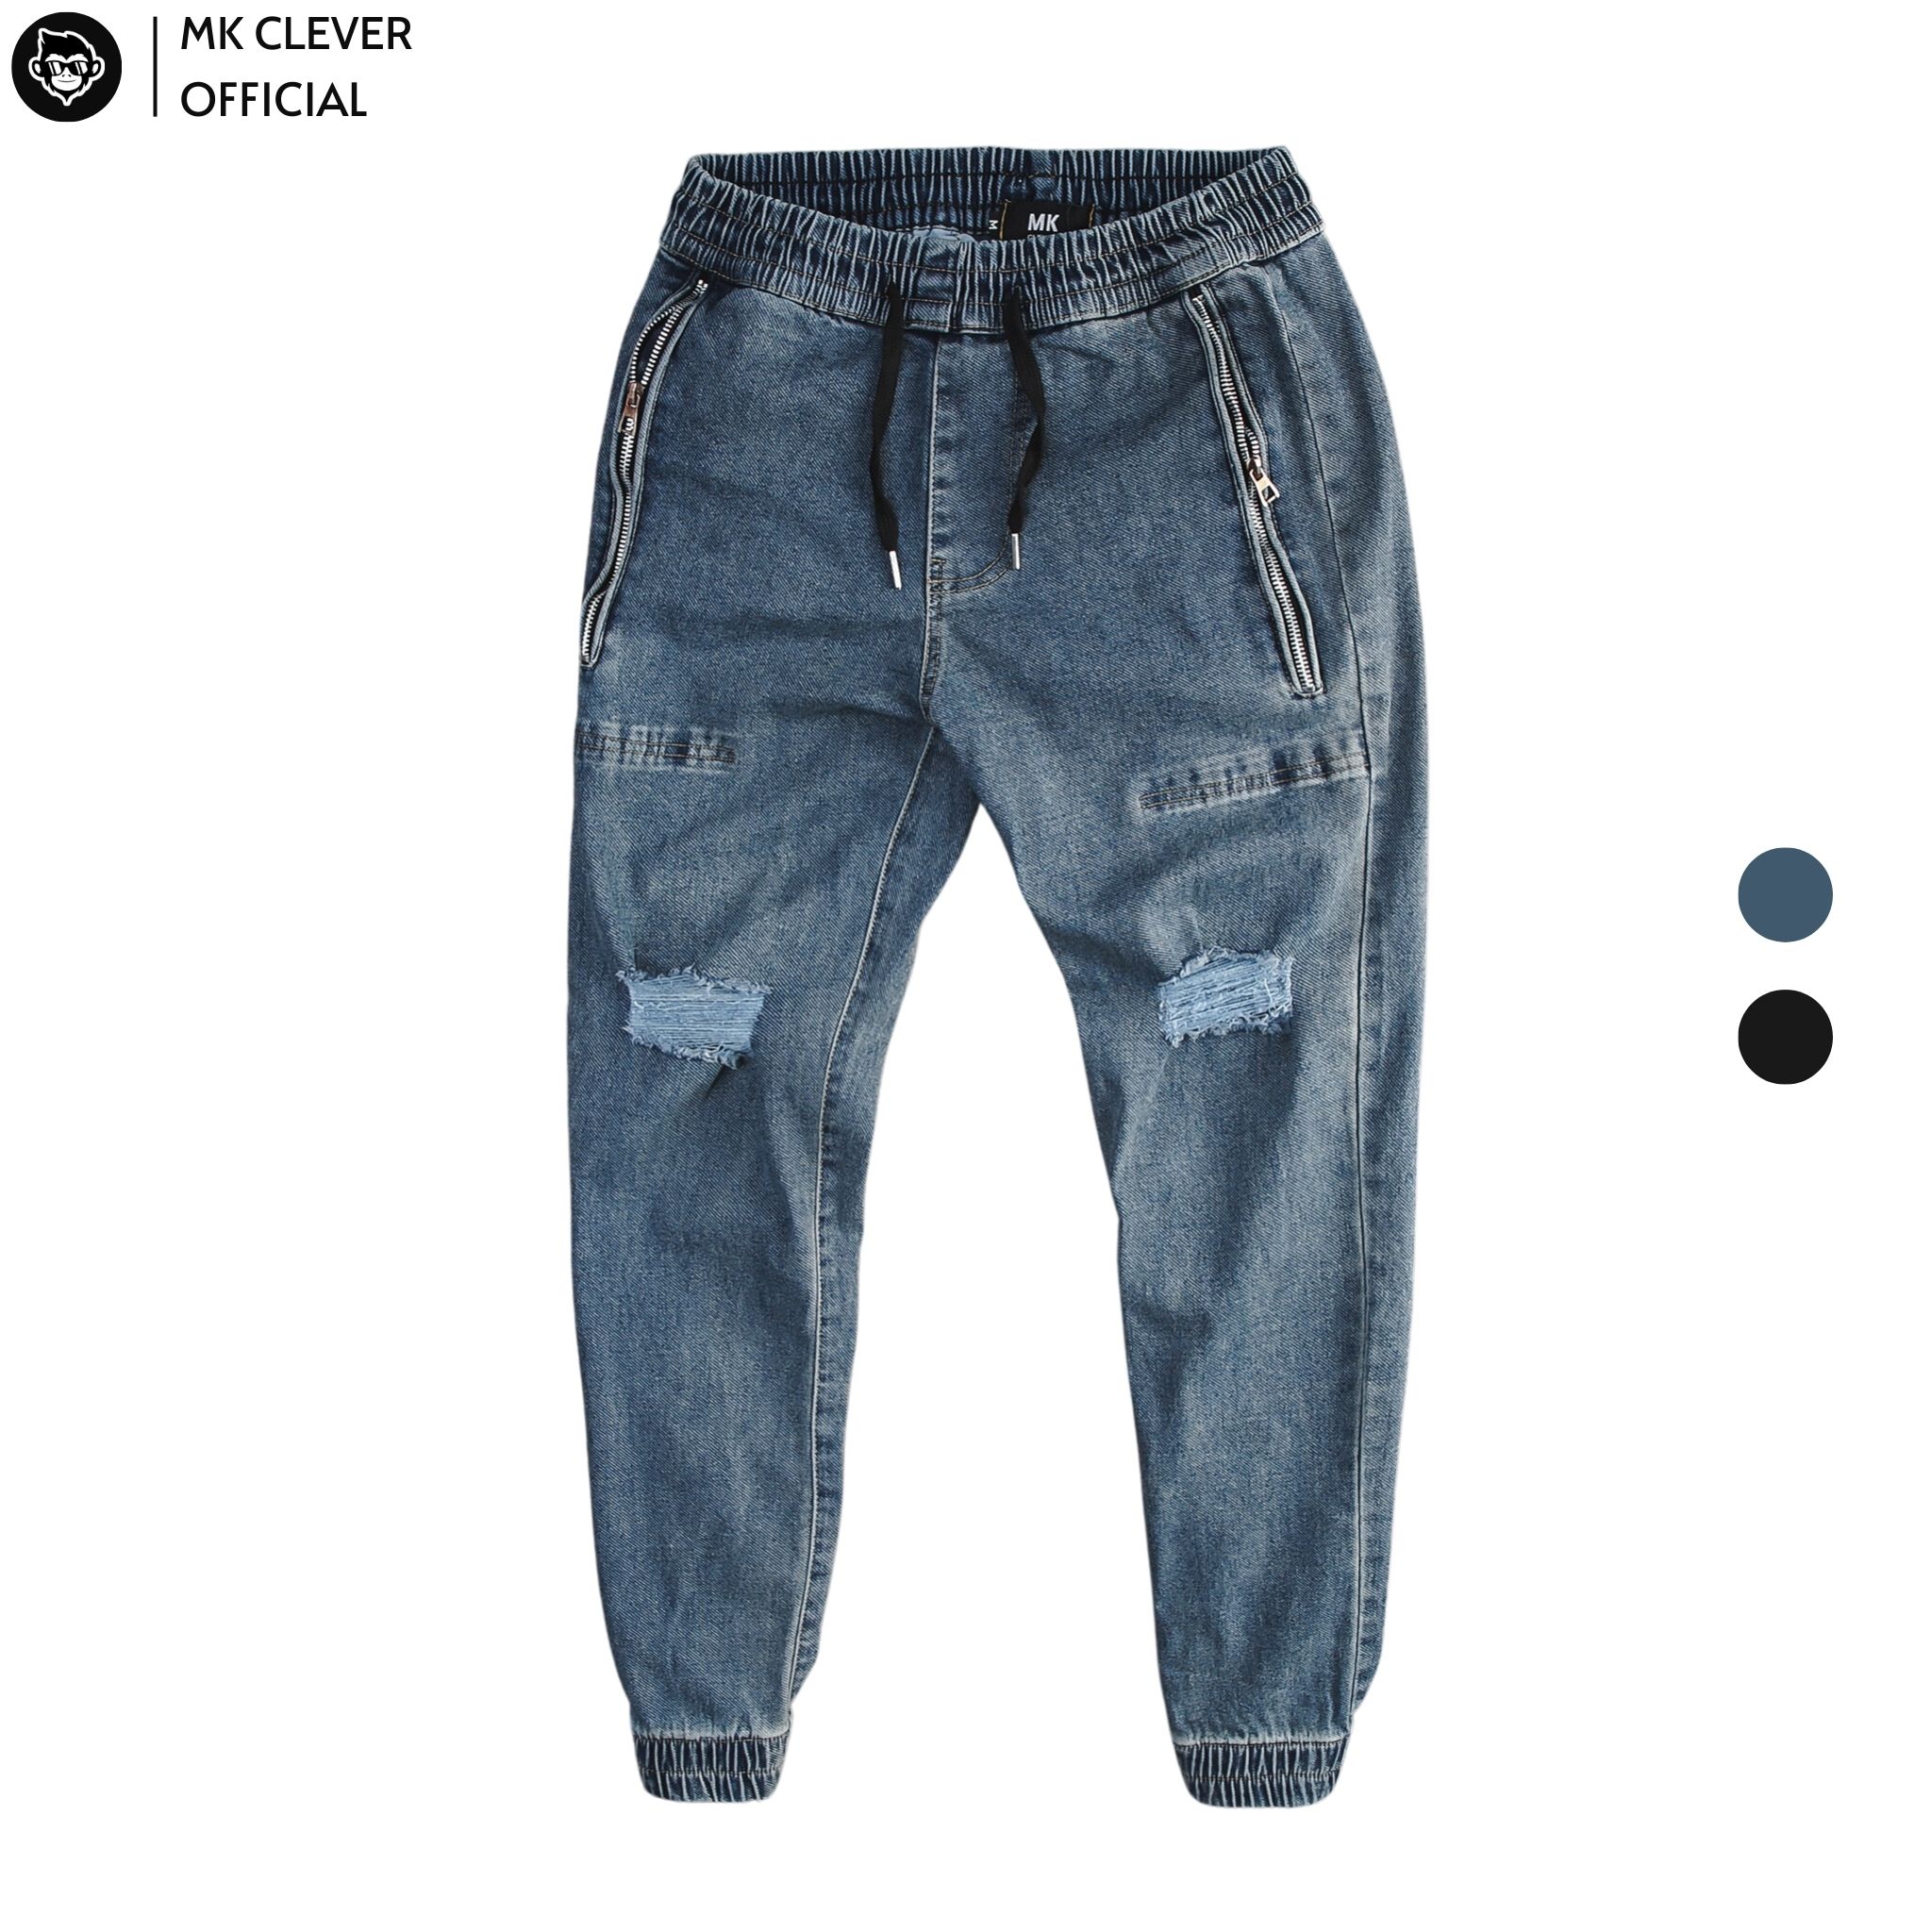 Quần Jogger Jeans R.G MK CLEVER Vải jeans dày dặn, mềm mịn